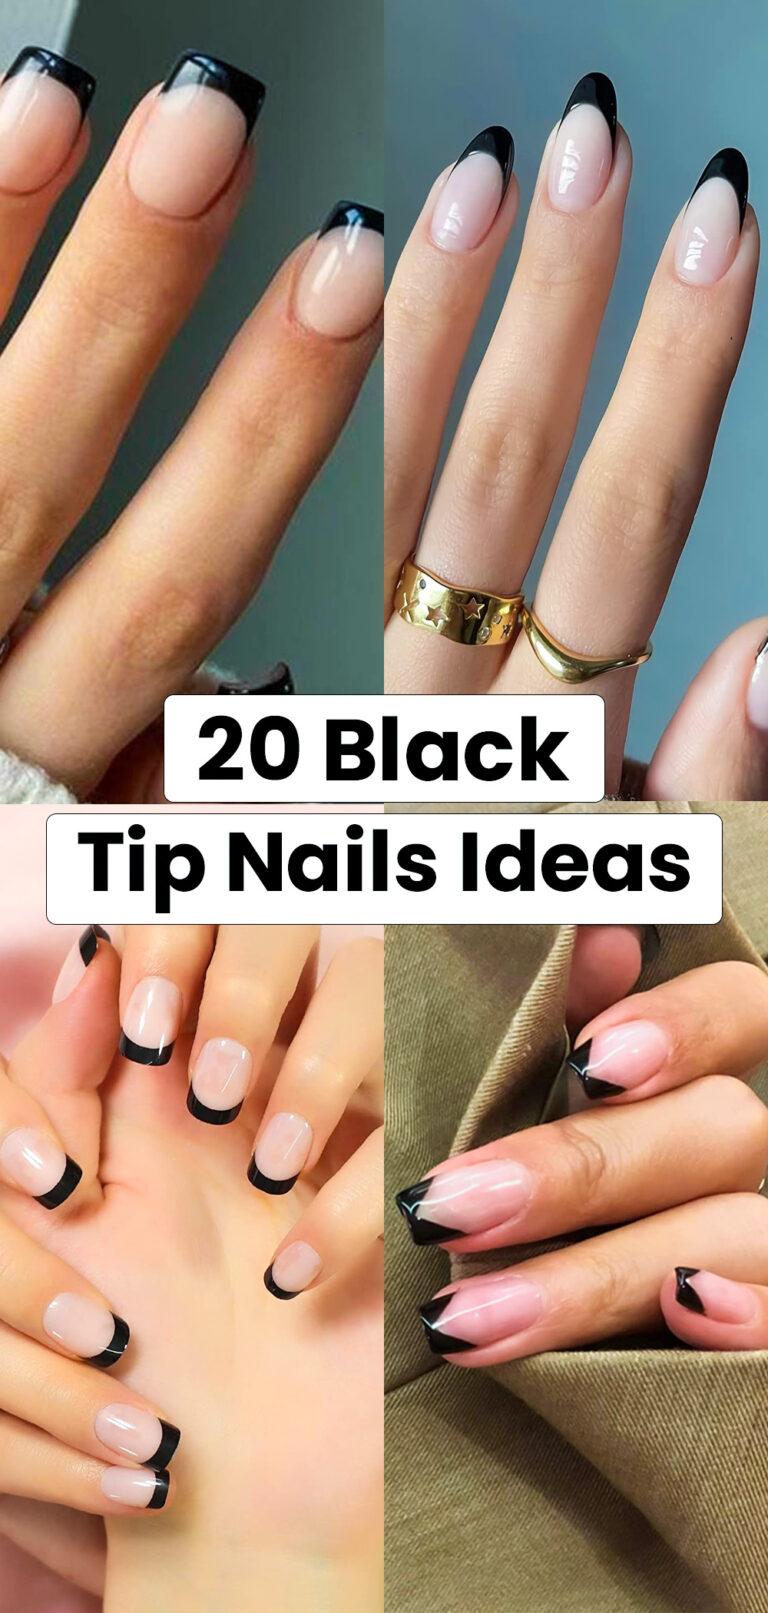 19 Black Tip Nails Ideas